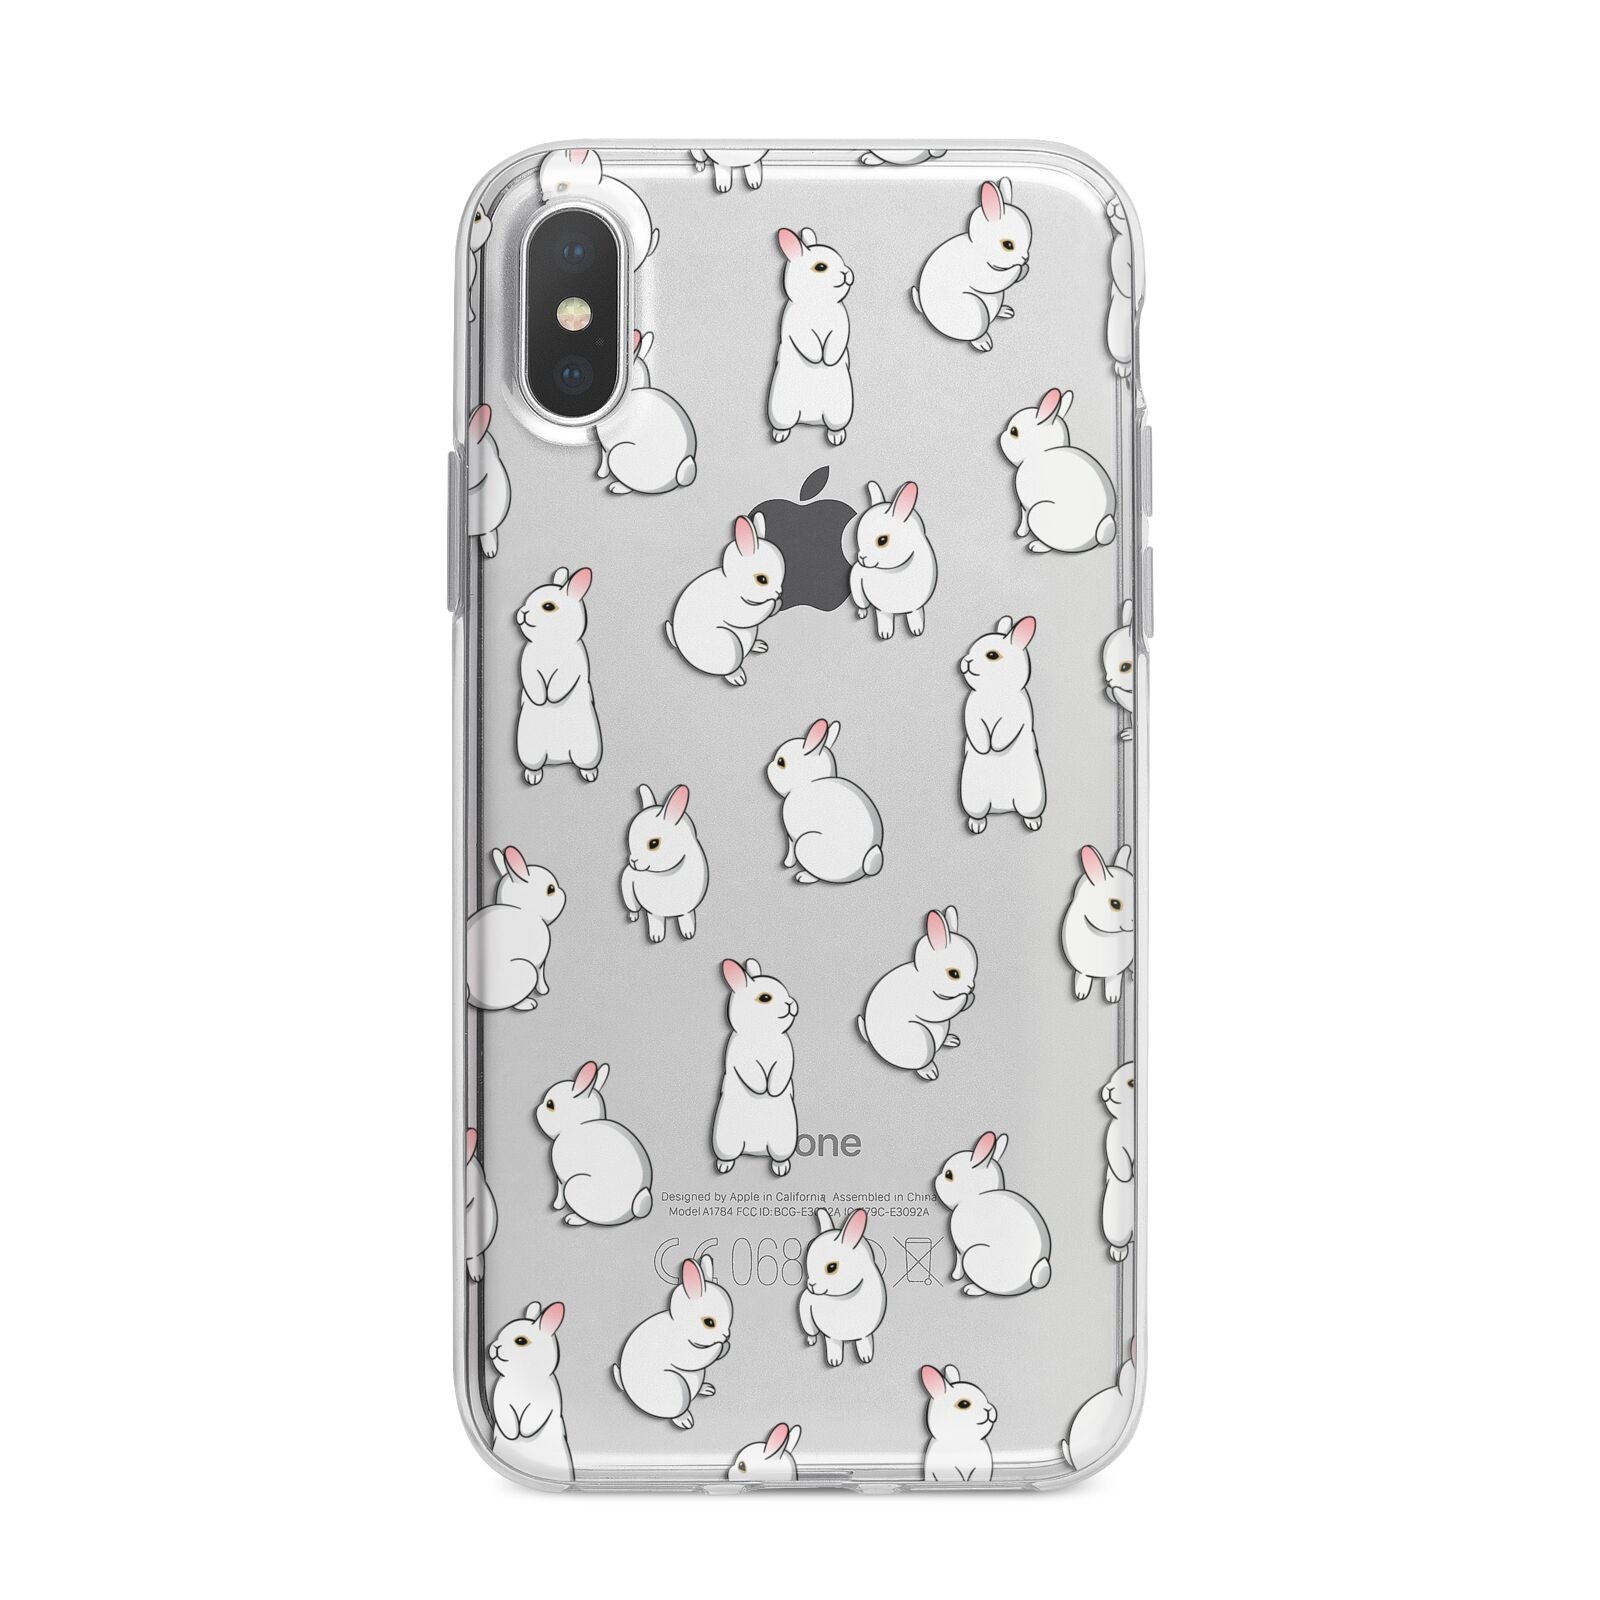 Bunny Rabbit iPhone X Bumper Case on Silver iPhone Alternative Image 1